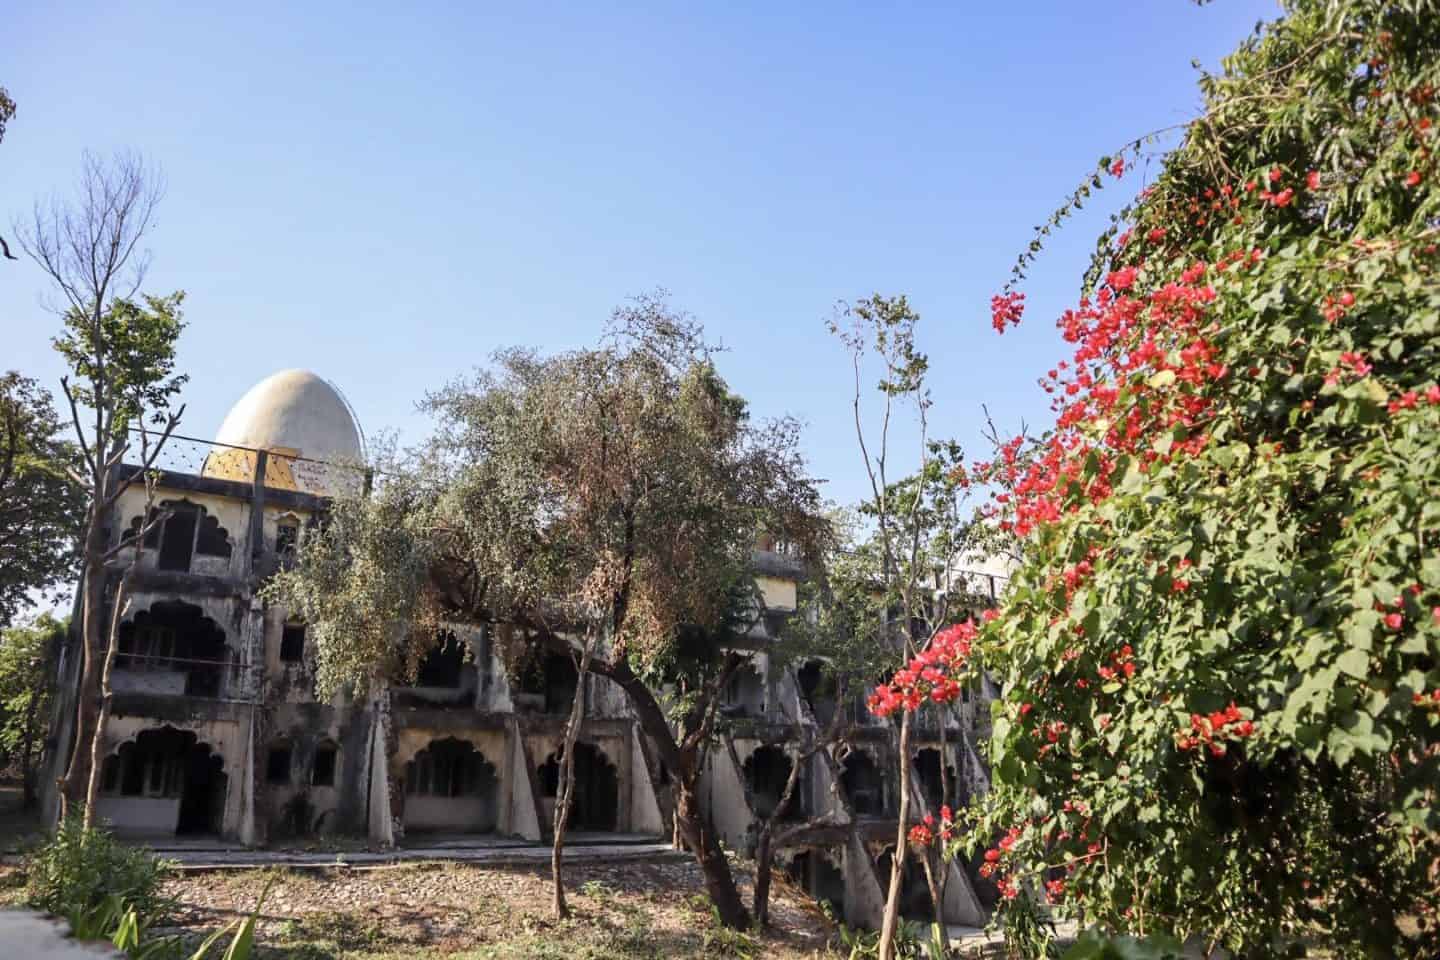 The Beatles Ashram Rishikesh accommodation ruins